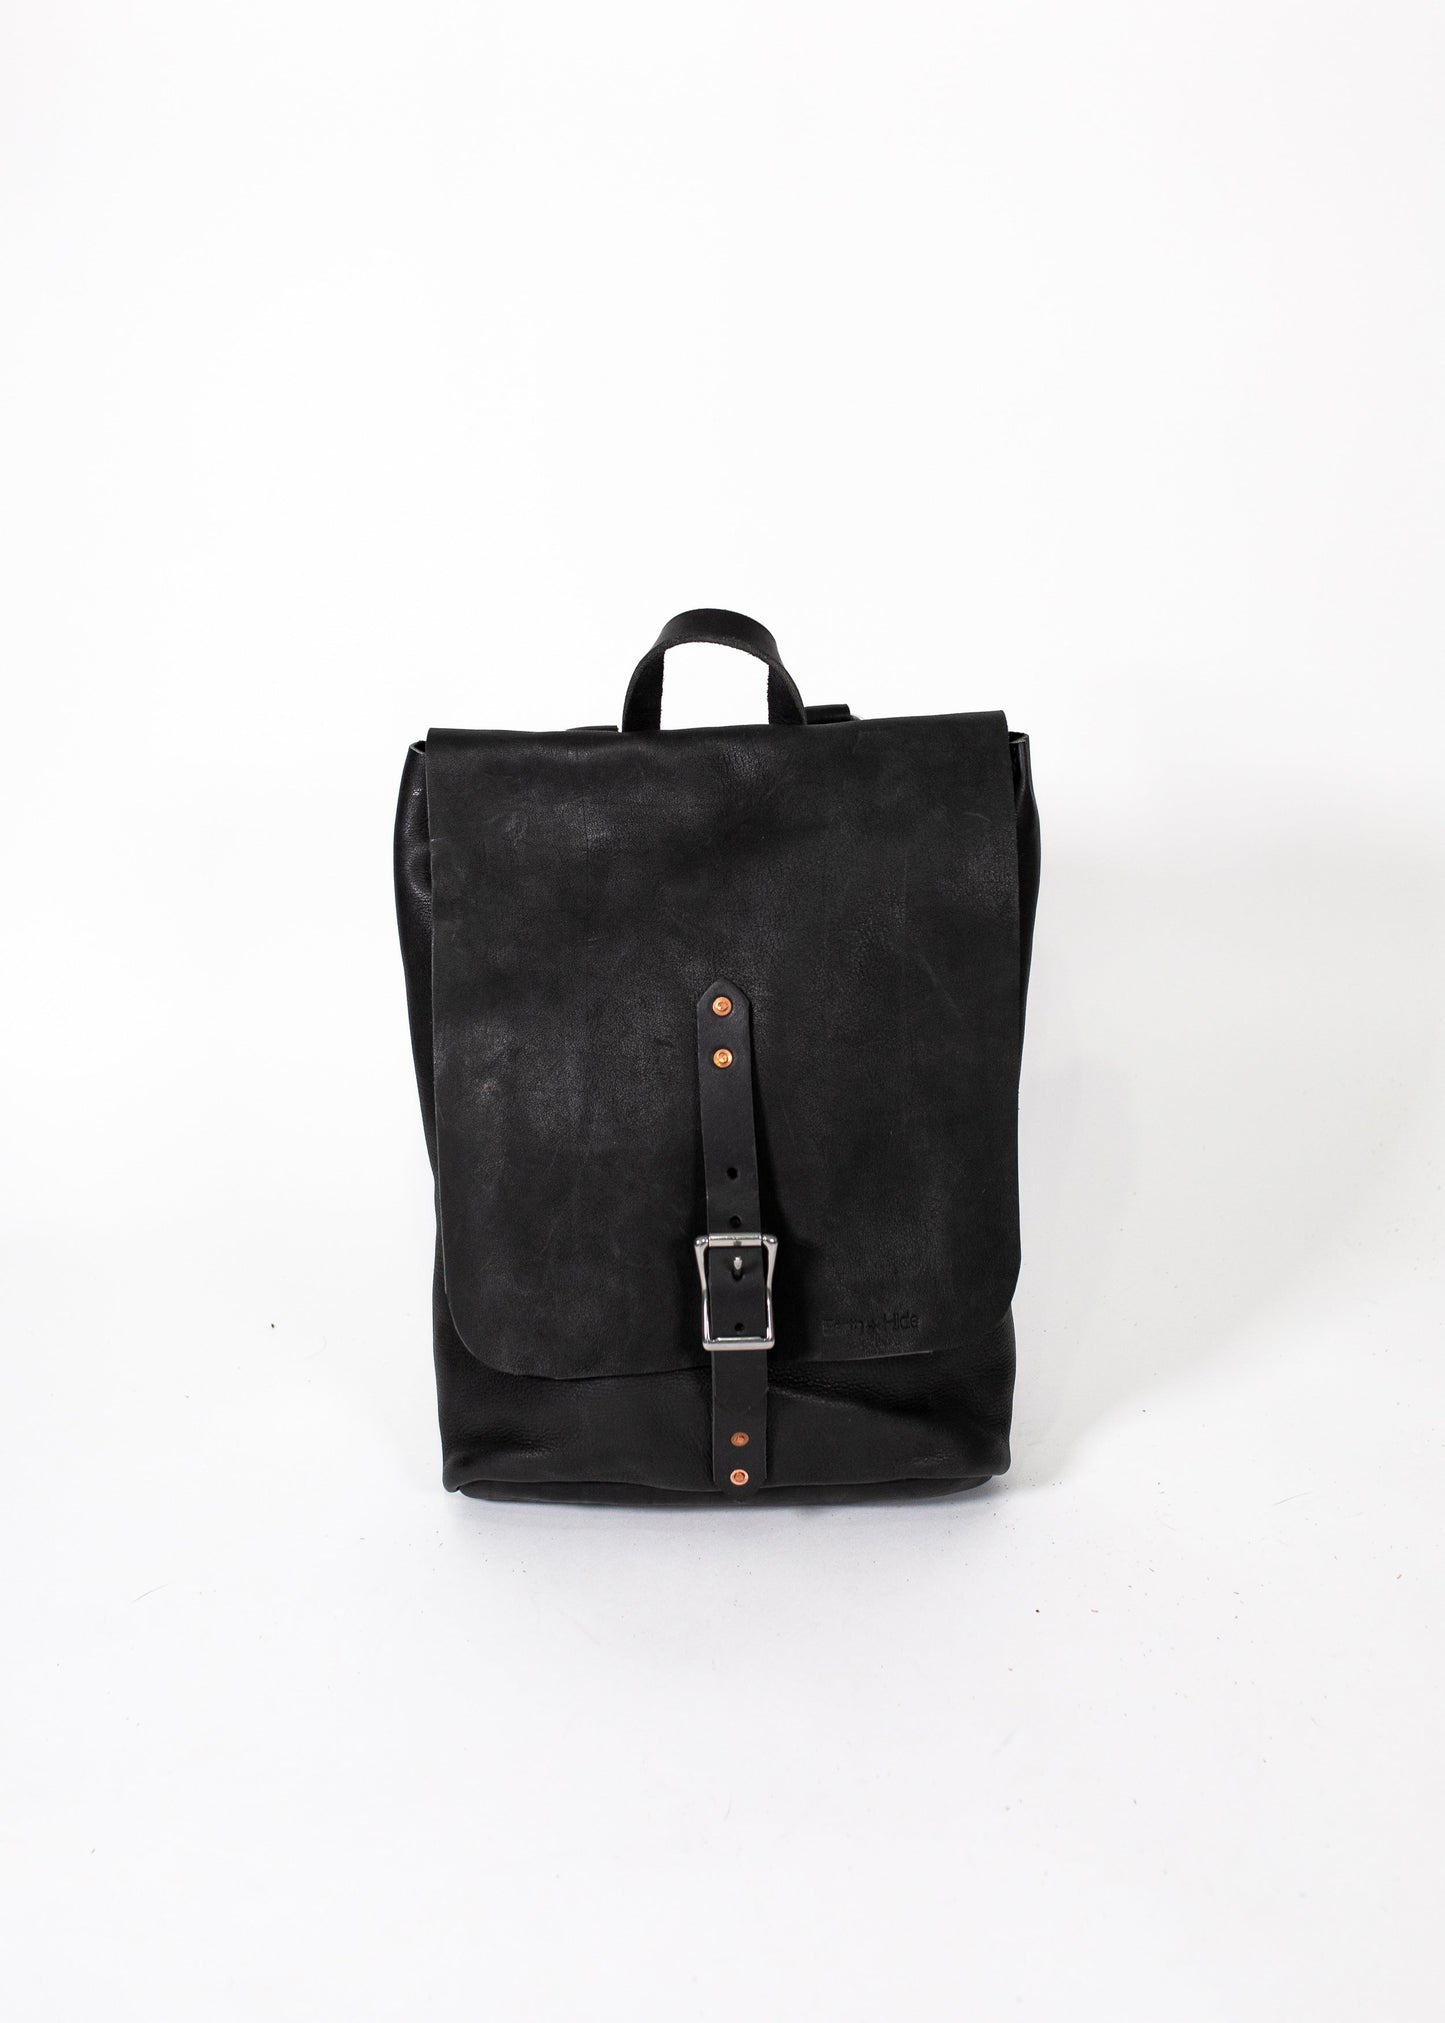 Jackson Backpack - Wholesale